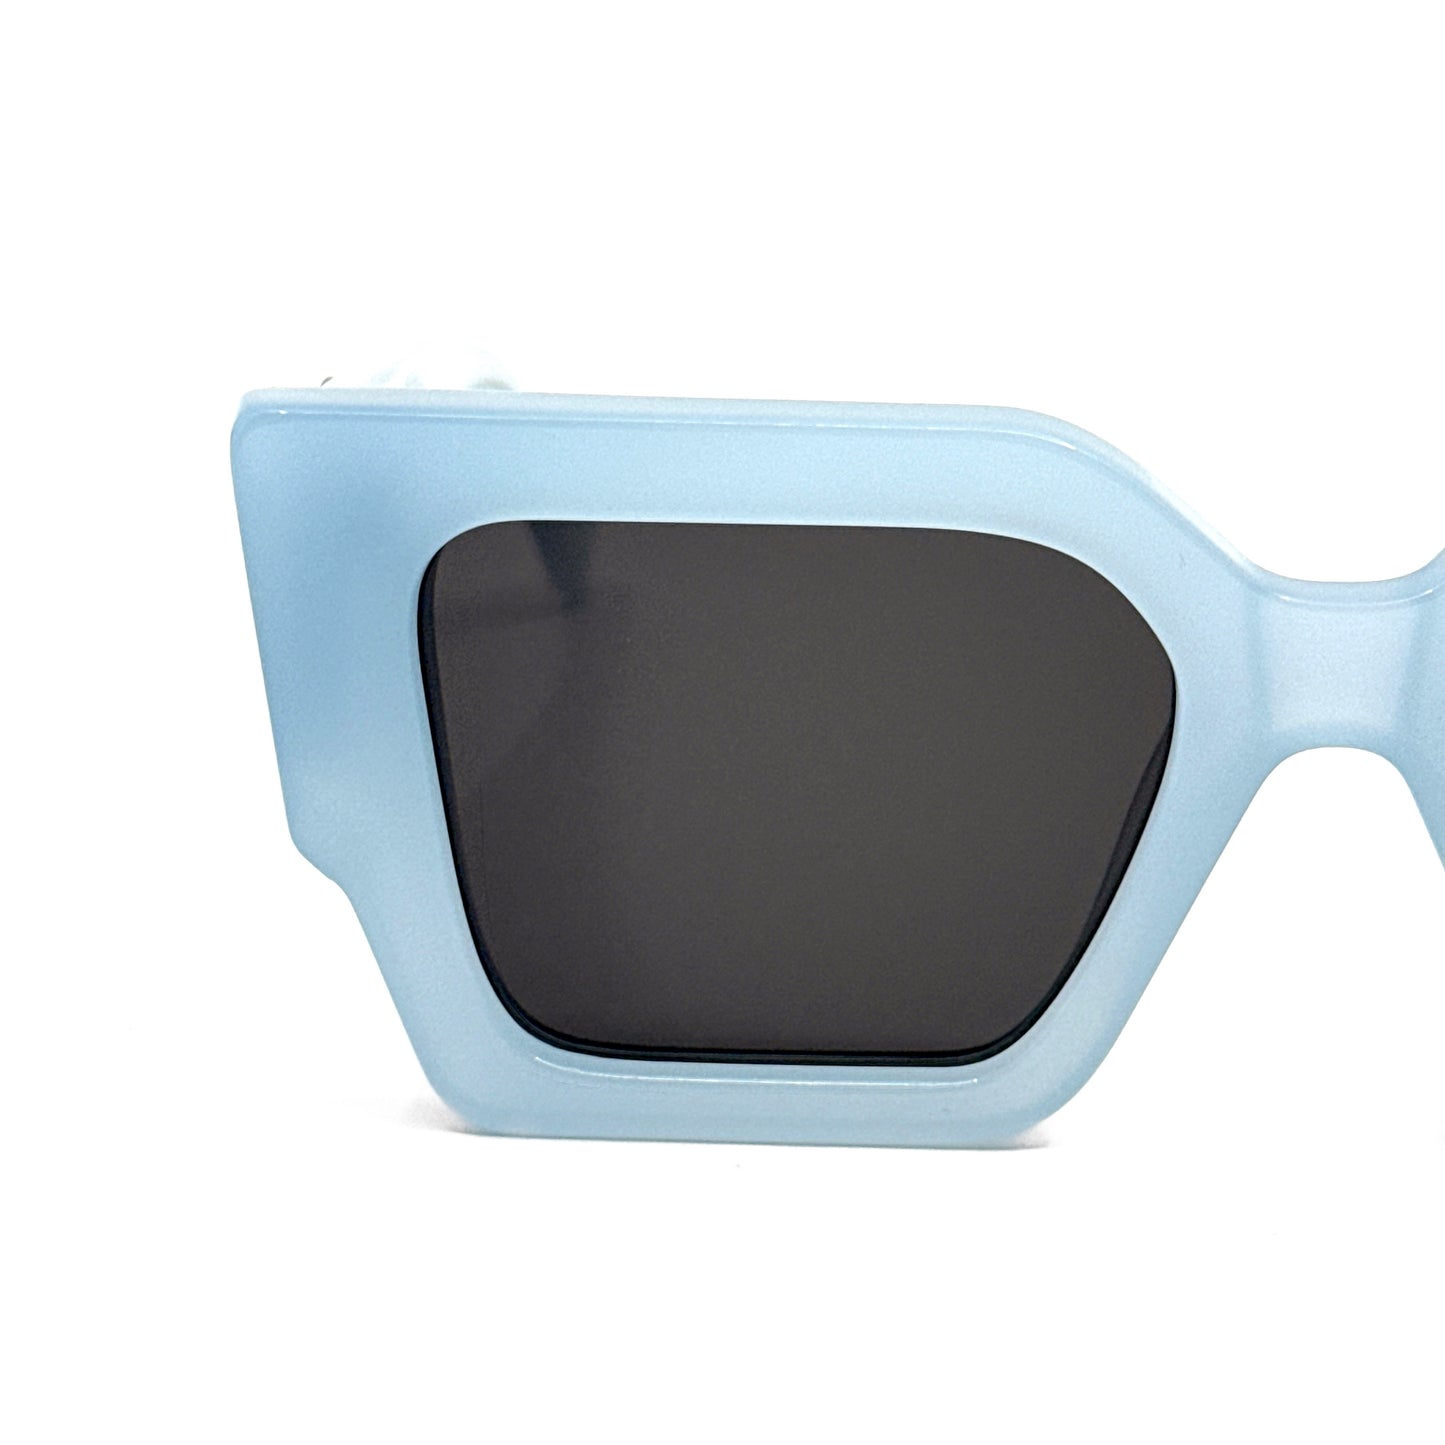 OFF-WHITE Sunglasses Catalina OERI128 4007